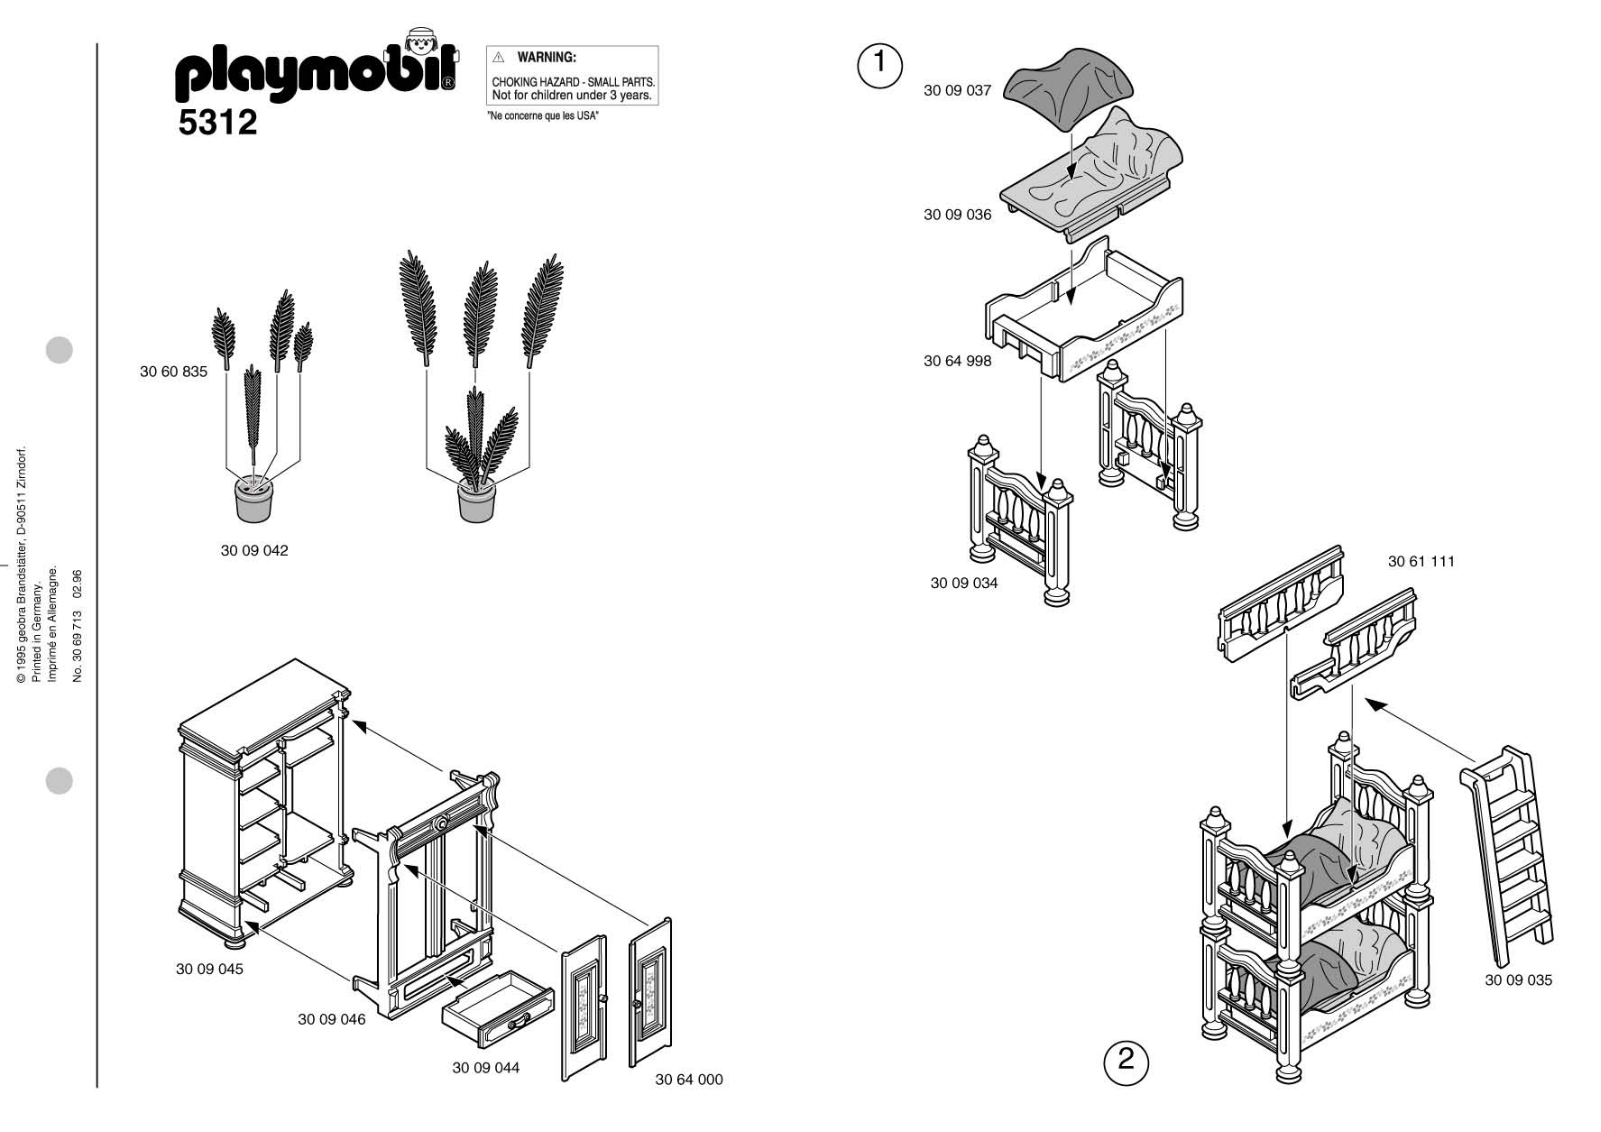 Playmobil 5312 Instructions